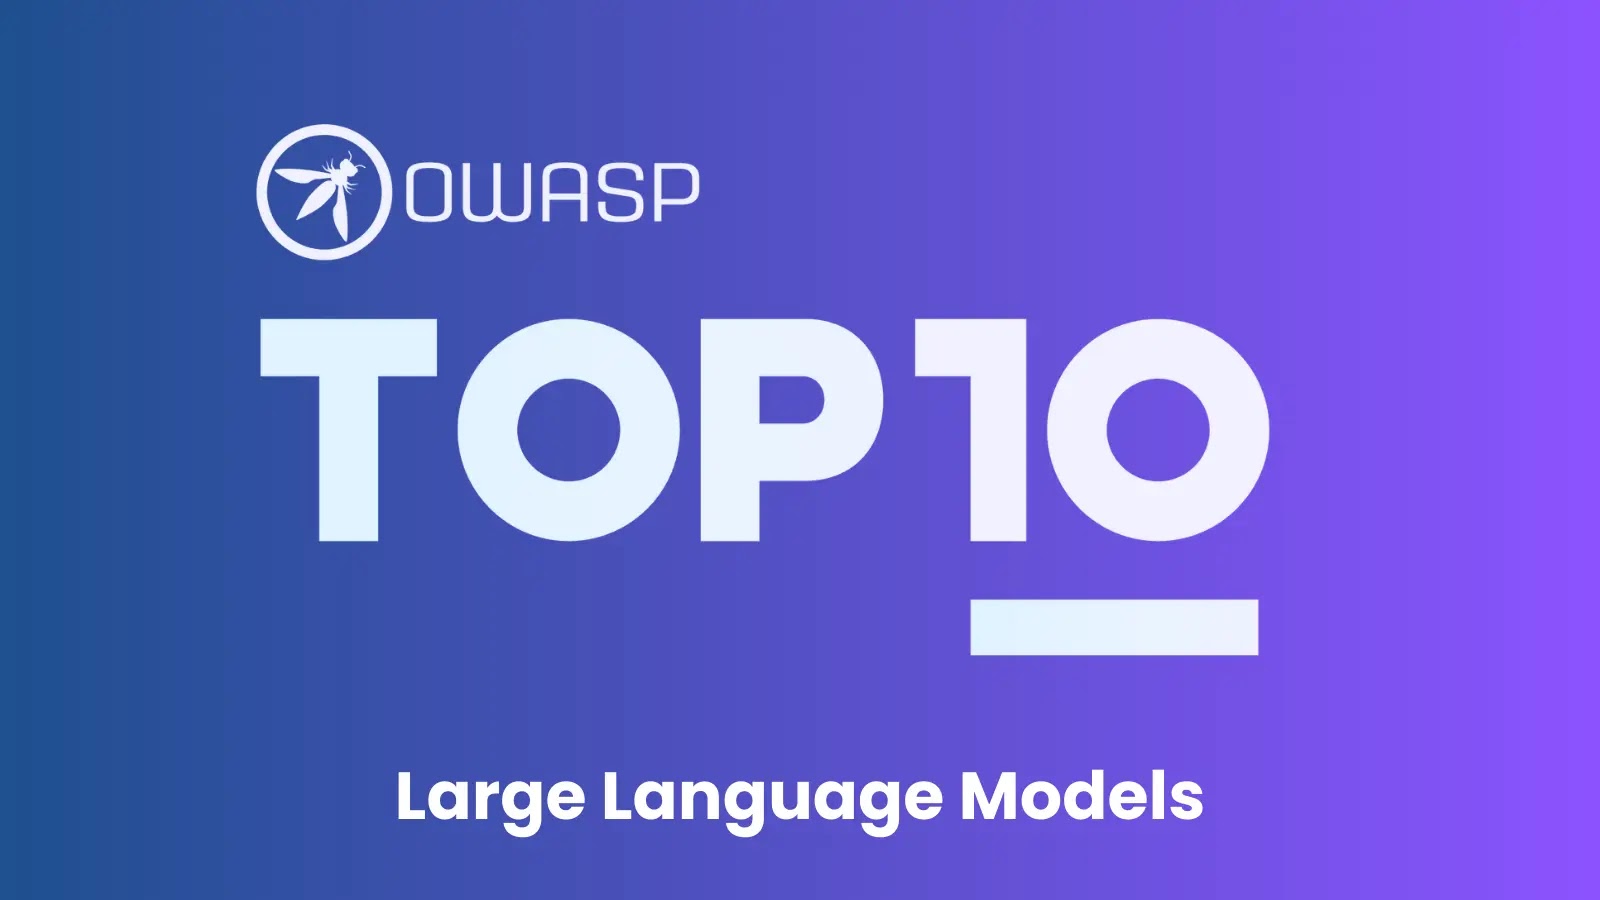 OWASP Top 10 LLMs